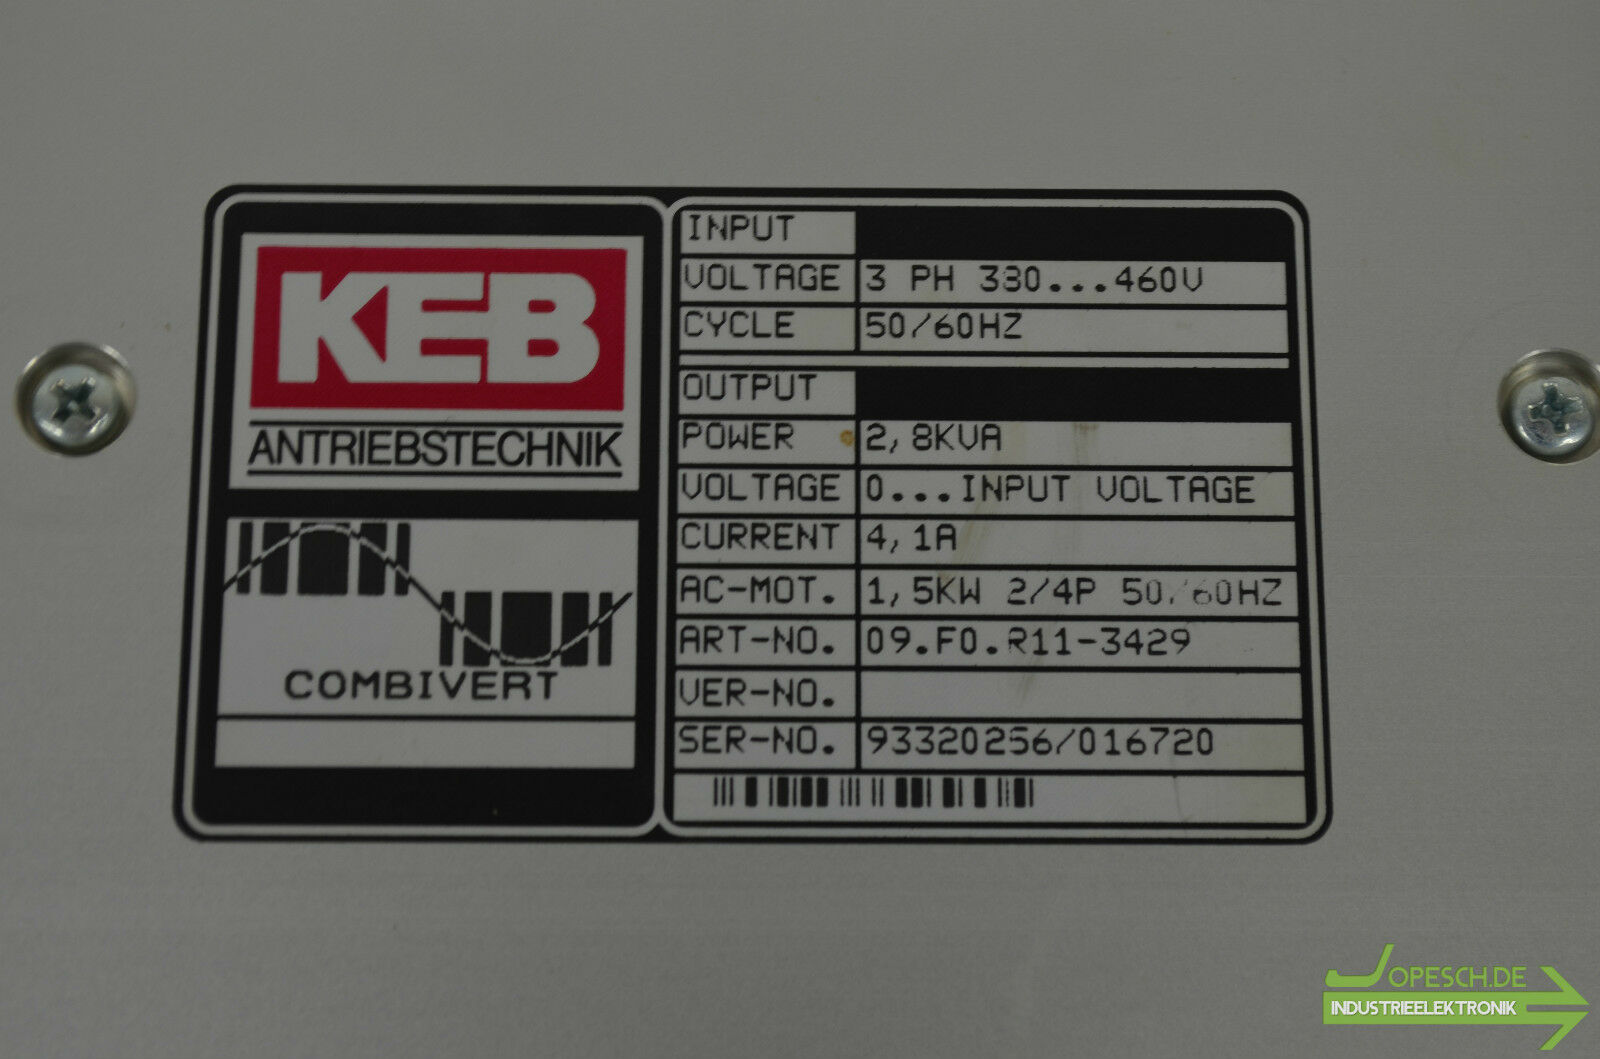 KEB Frequenzumrichter 09.F0.R11-3429 2,8 kVA